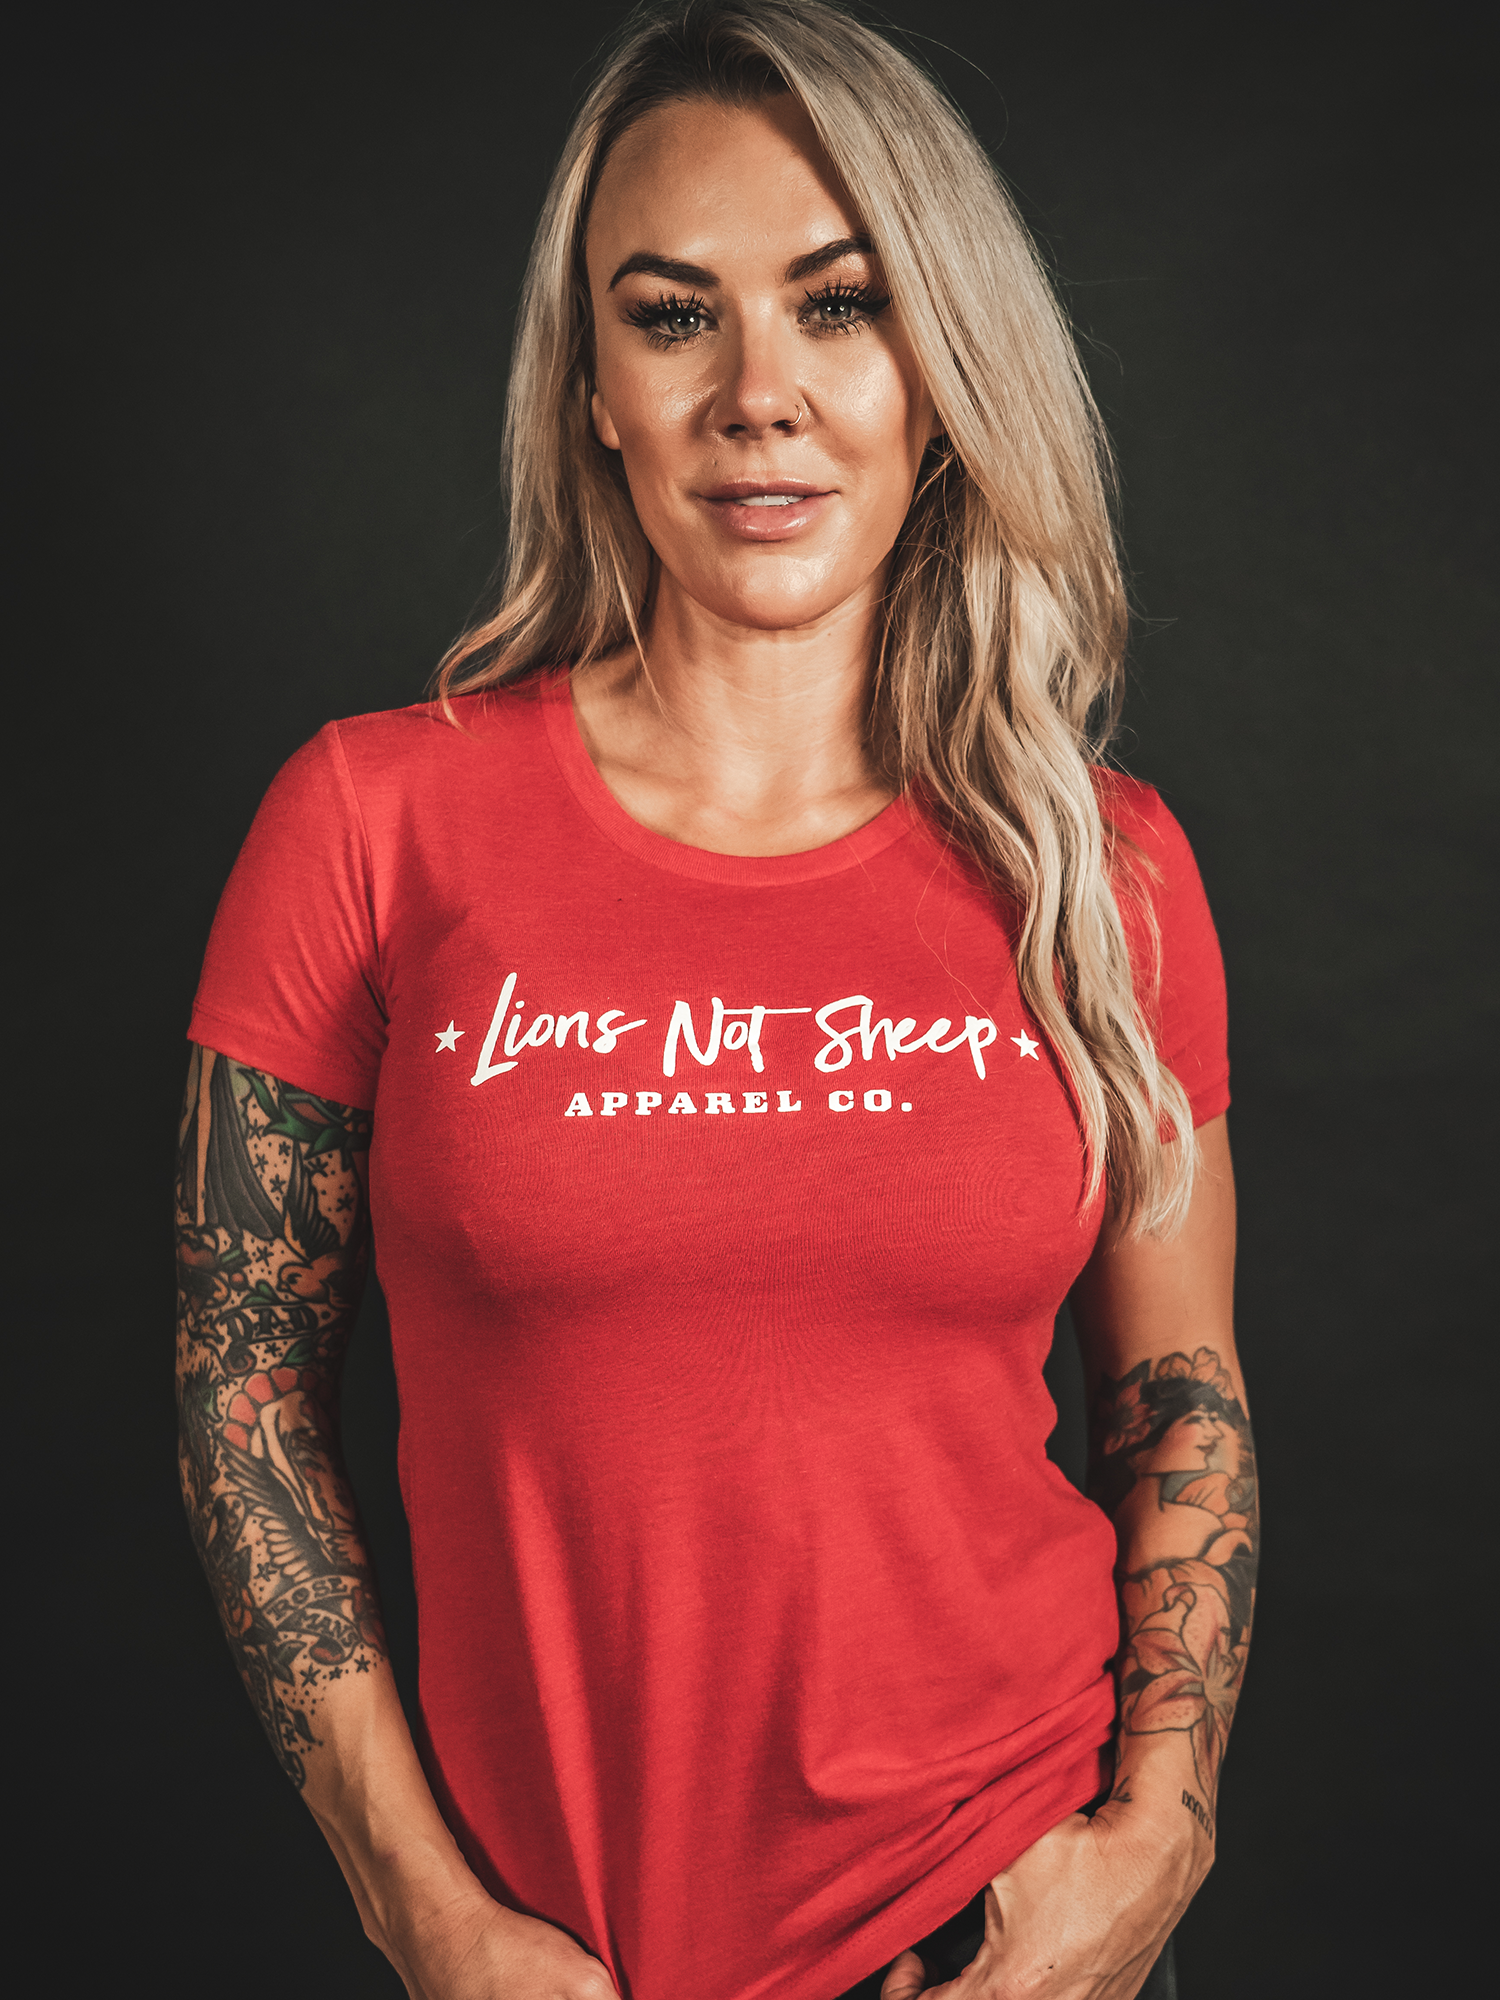 LIONS NOT SHEEP APPAREL CO. Womens Tee - Lions Not Sheep ®